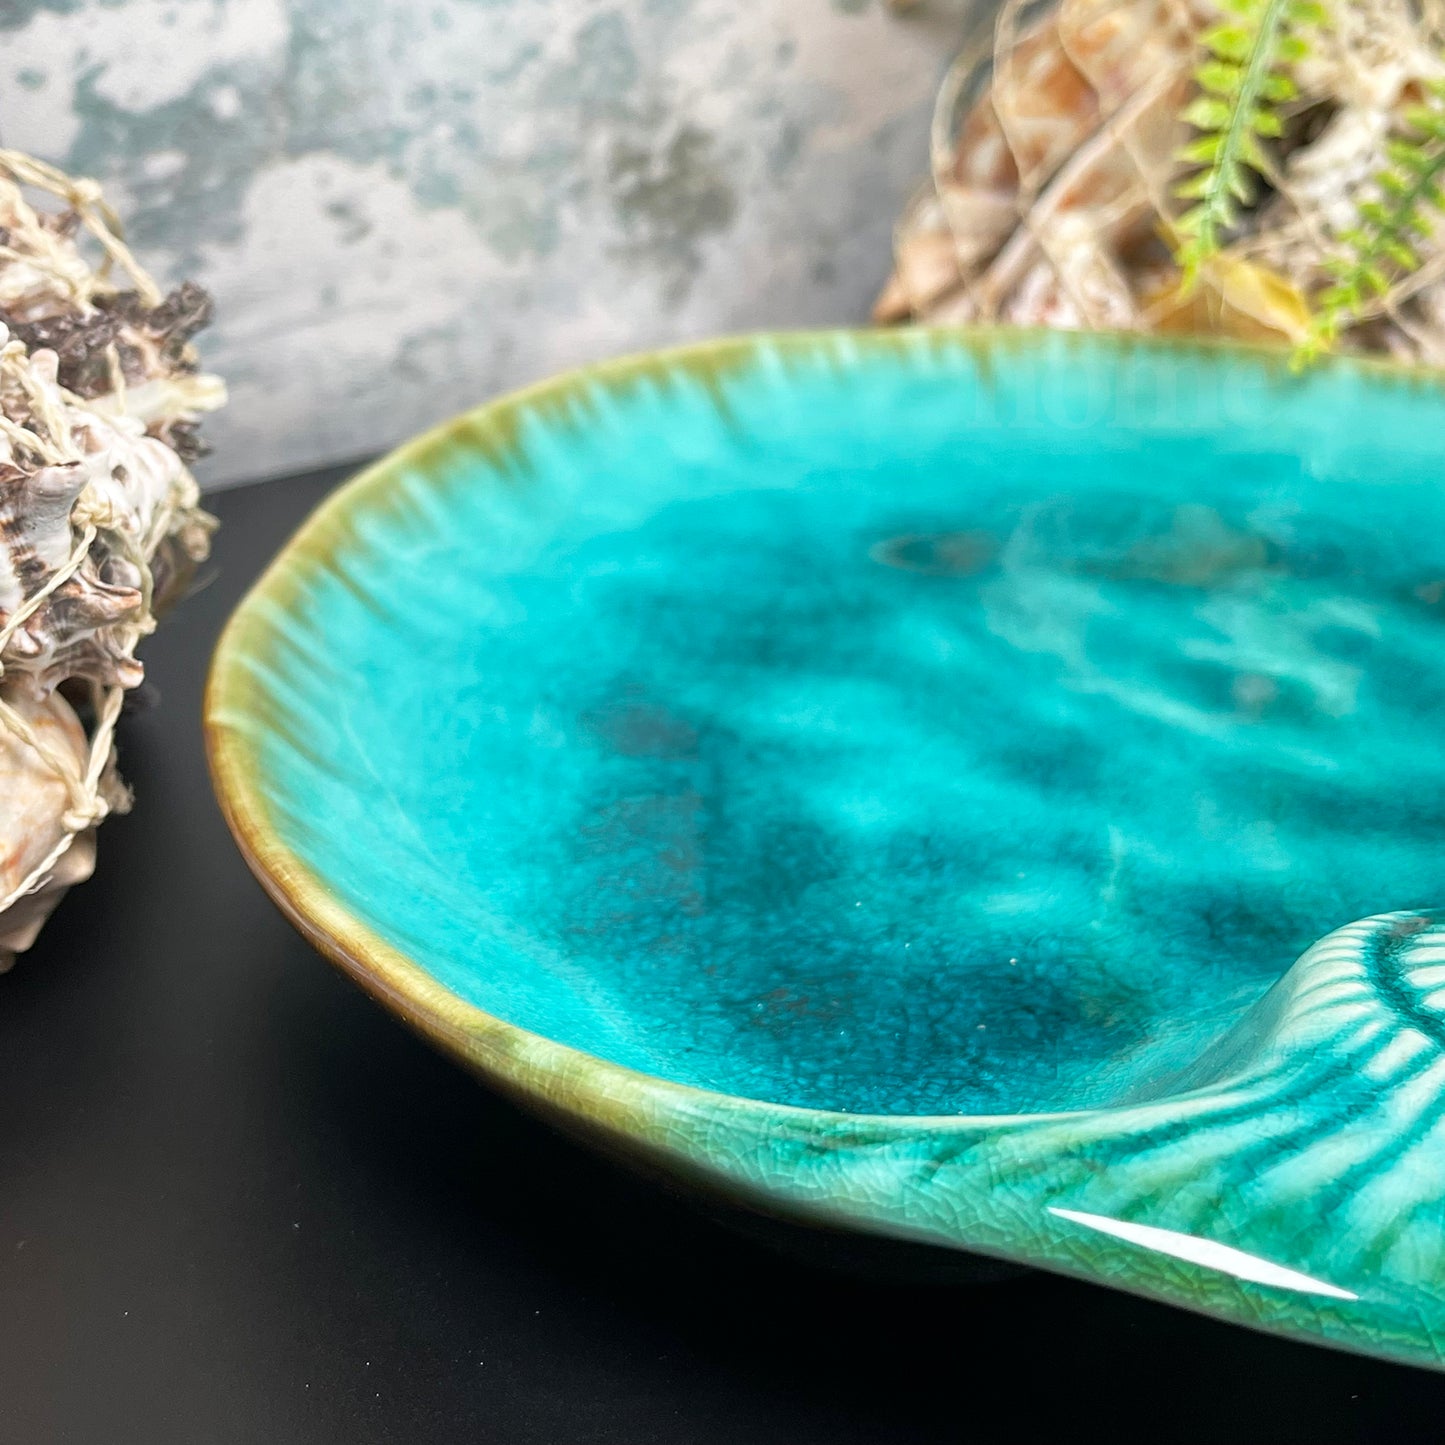 Keramik-Schmuckschale mit blaugrüner Muschel